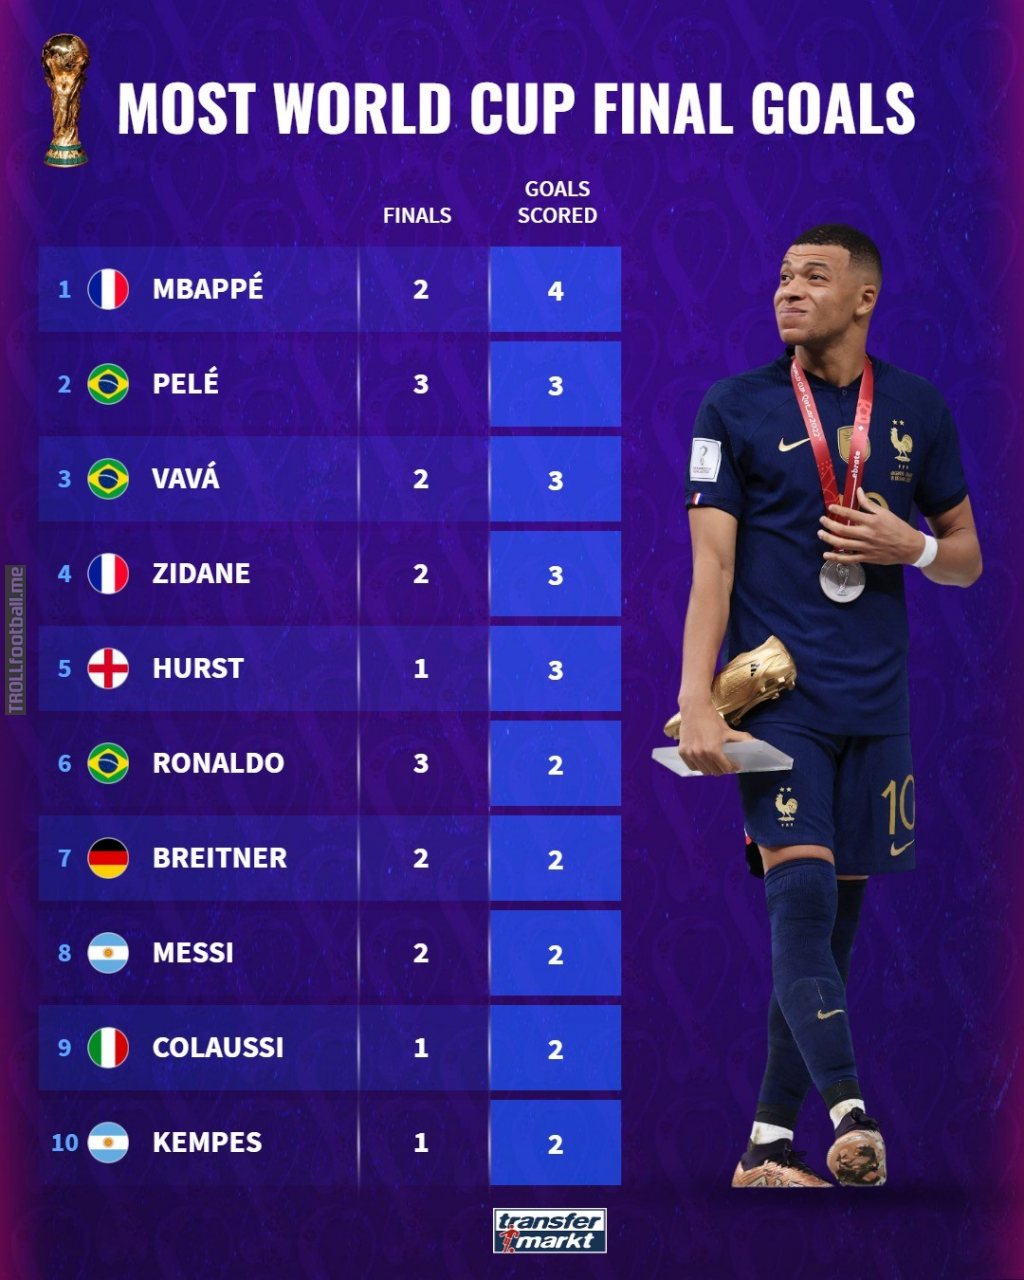 [Transfermarkt] The Most World Cup Final Goals